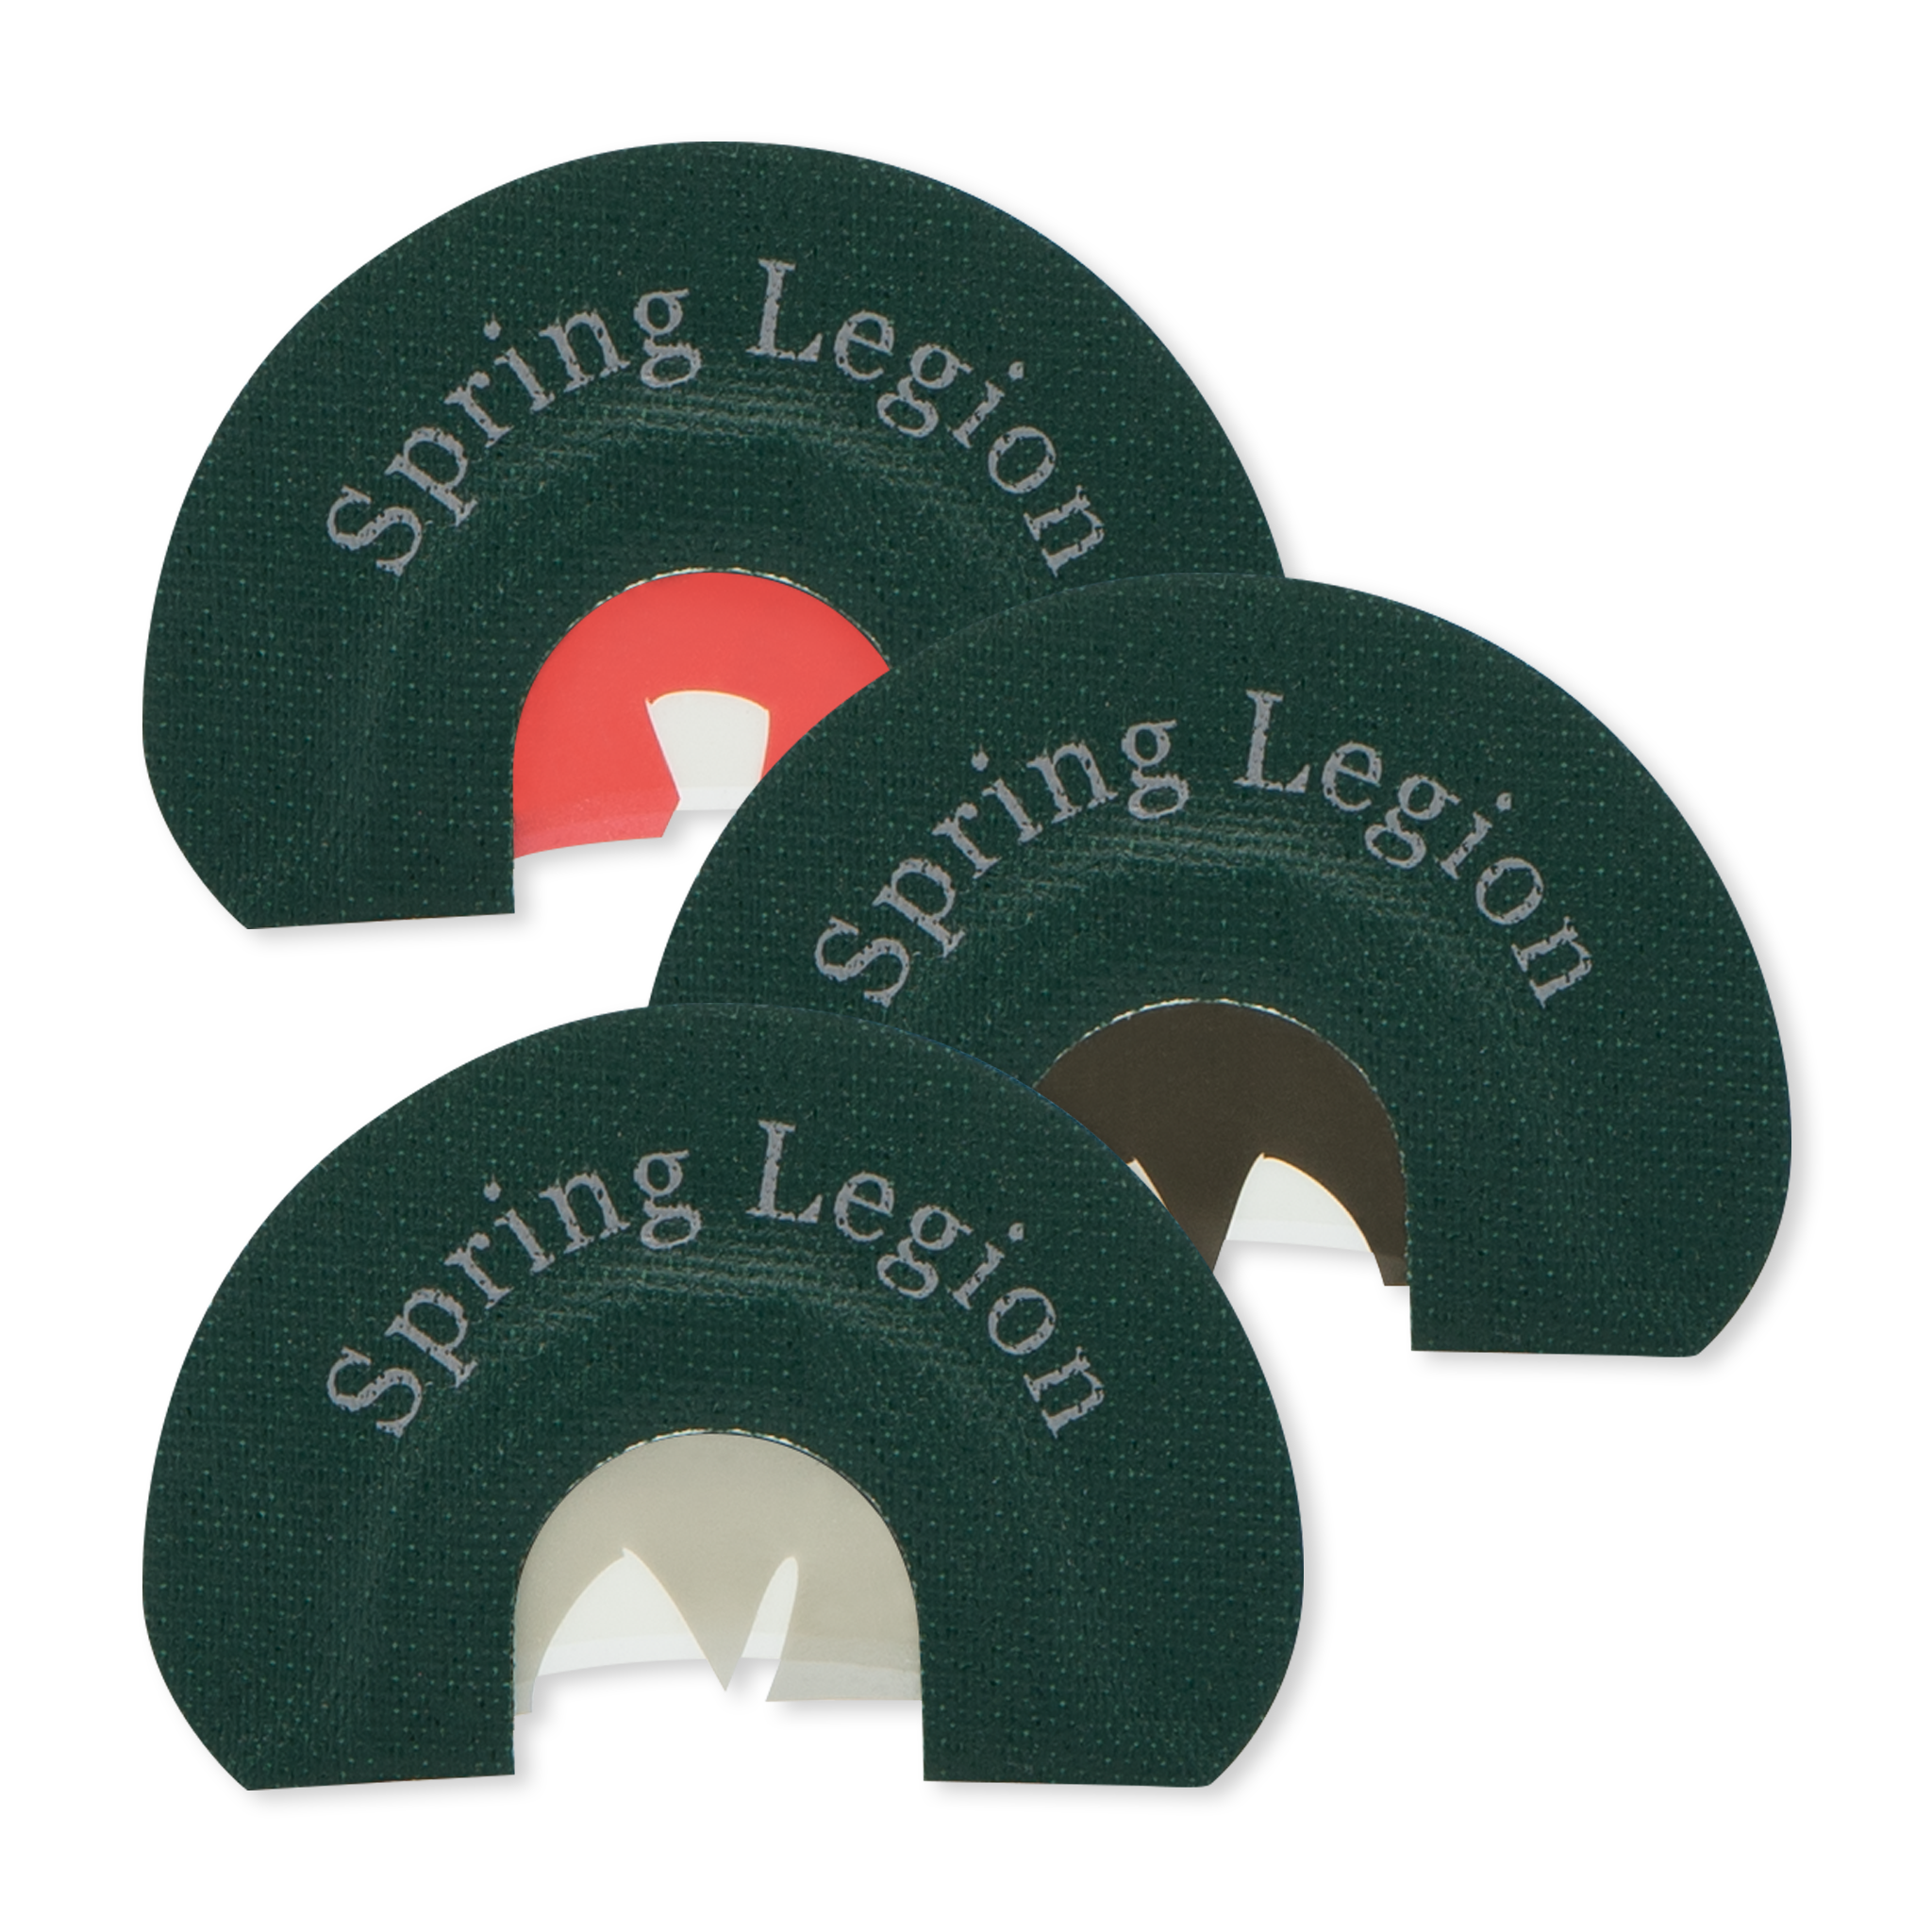 Spring Legion Collection